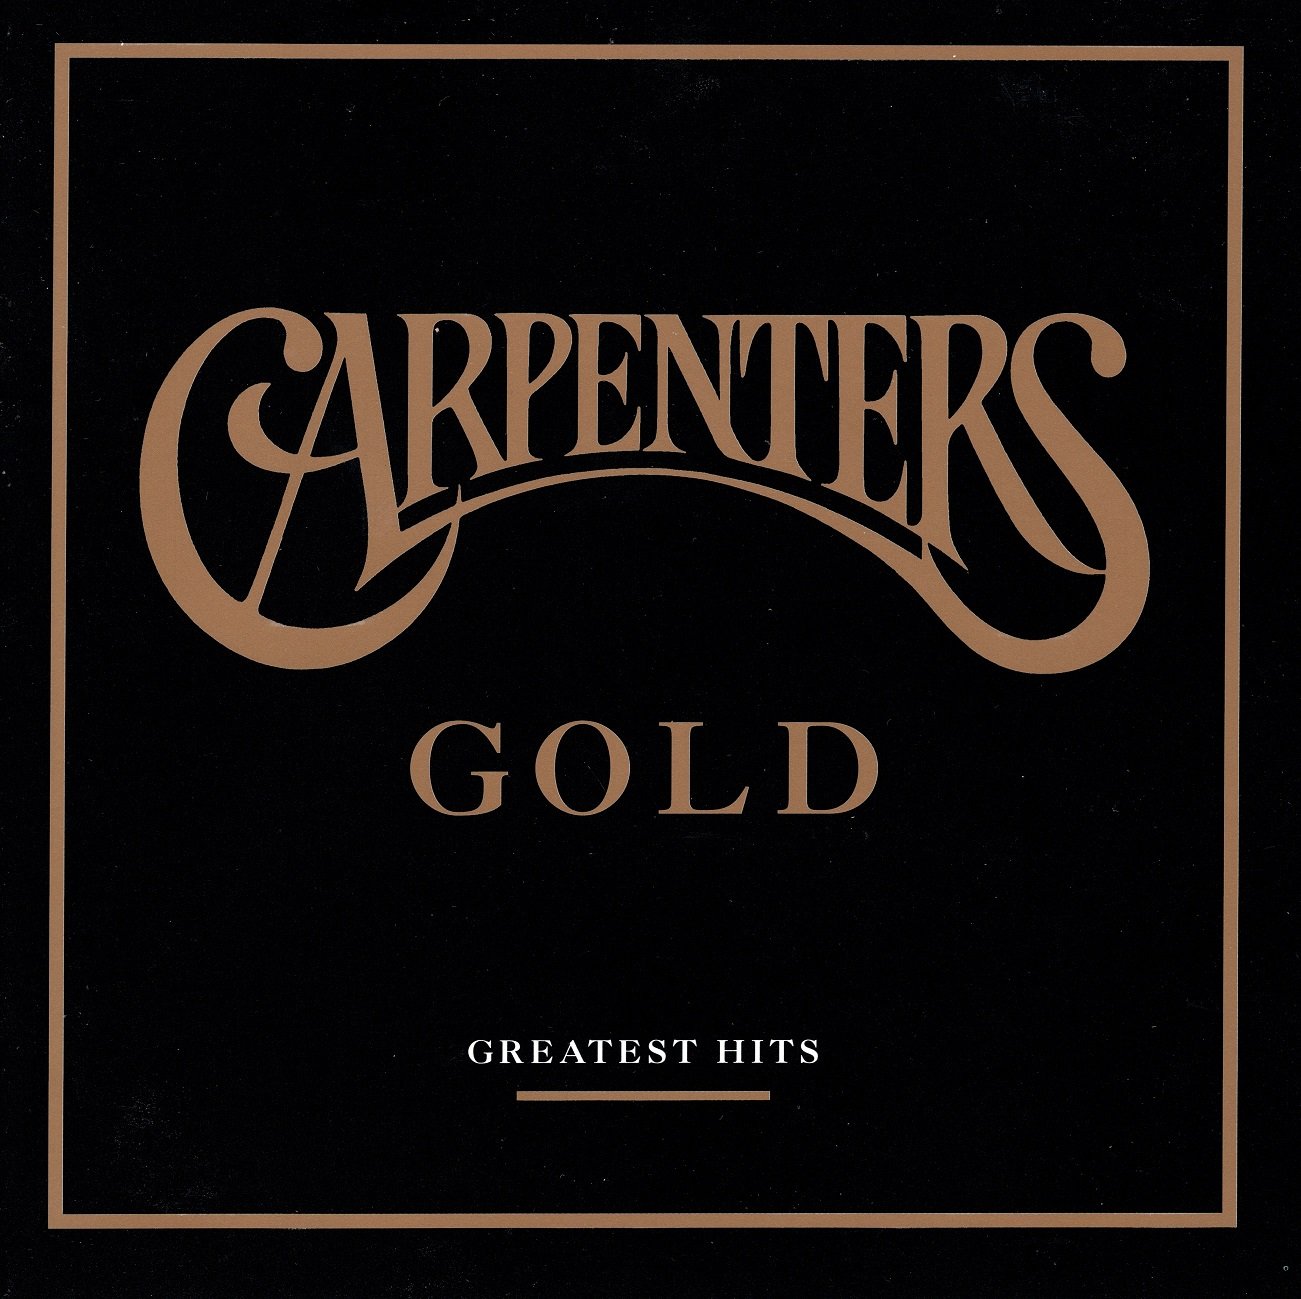 Carpenters Carpenters Gold (Greatest Hits) (2000/2018) [SACD